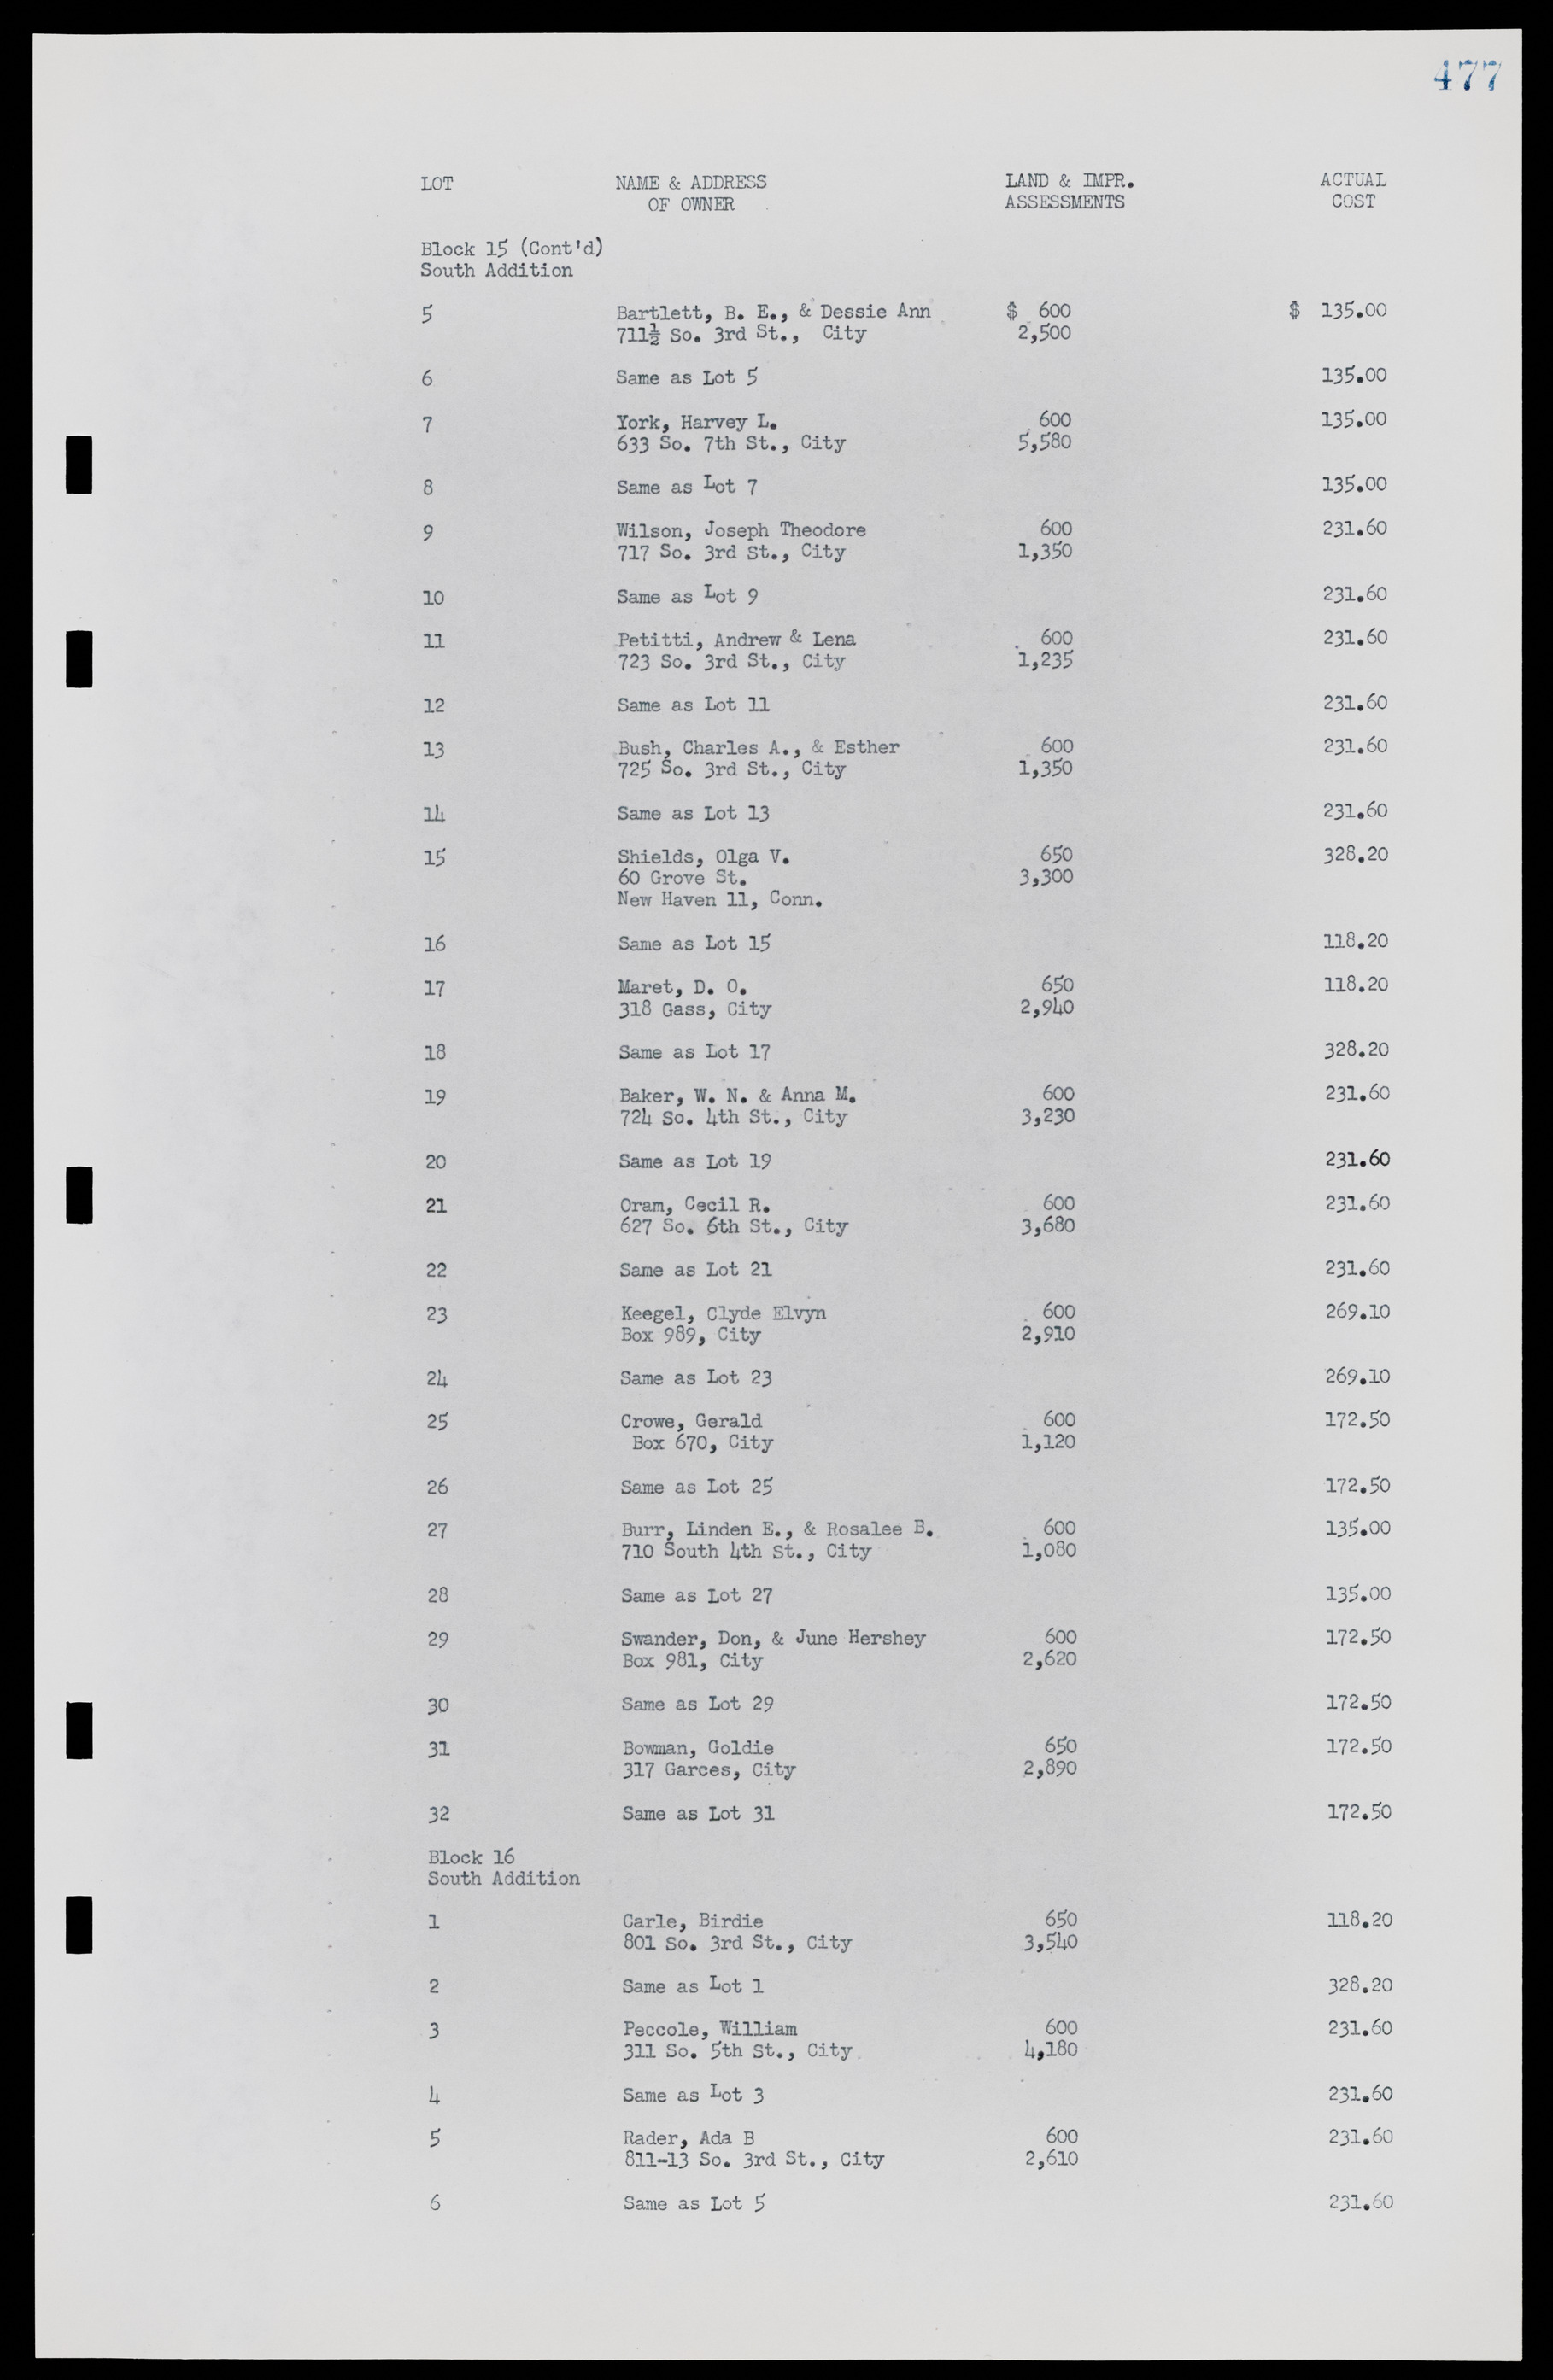 Las Vegas City Commission Minutes, November 7, 1949 to May 21, 1952, lvc000007-493